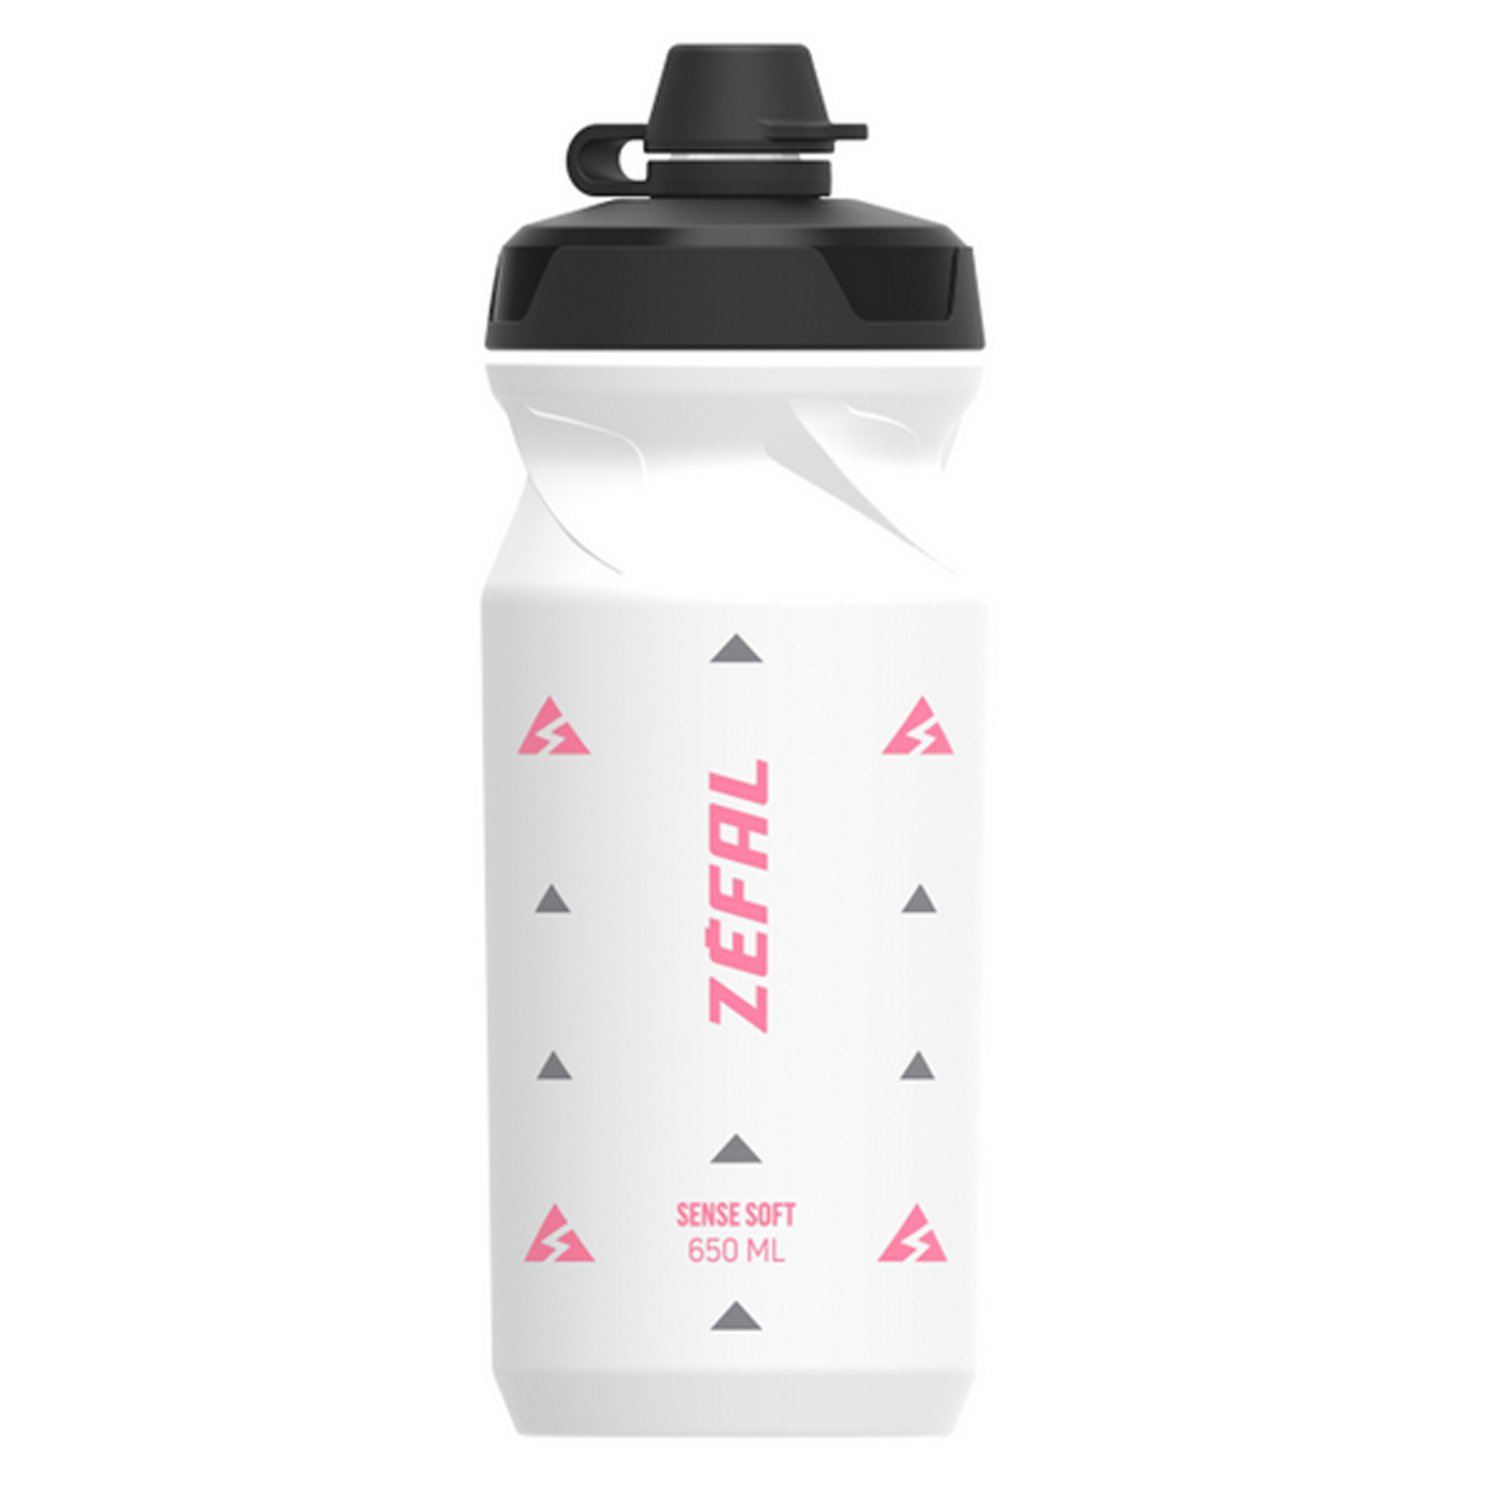 Фляга велосипедная Zefal Sense Soft 65 No-Mud Bottle, пластик, 650 мл, белый/розовый, 2023, 155R фляга велосипедная oxford water bottle hydra пластик 700 мл 2023 bt152b